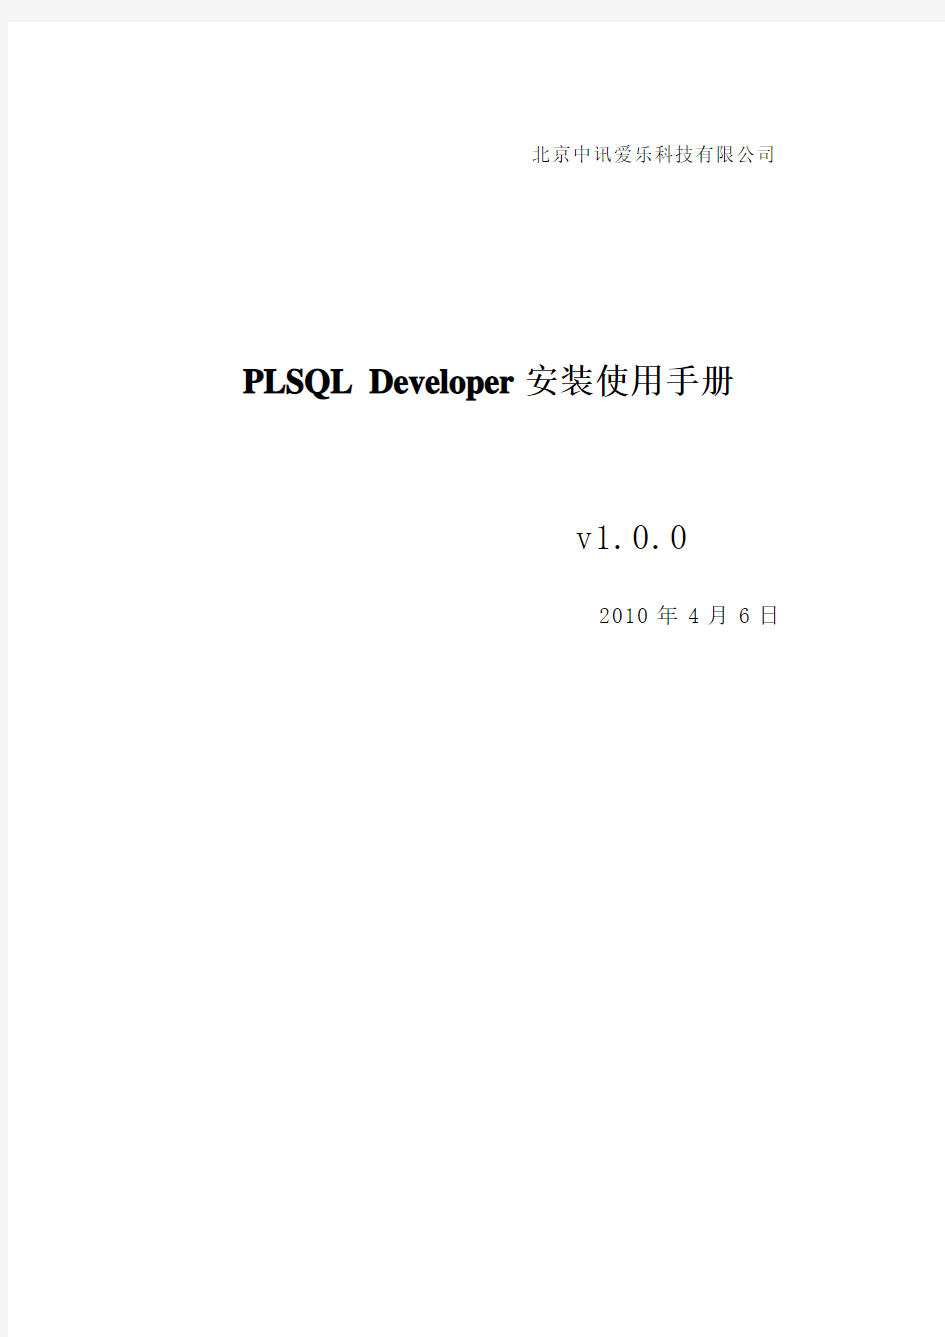 PLSQLDeveloper使用手册